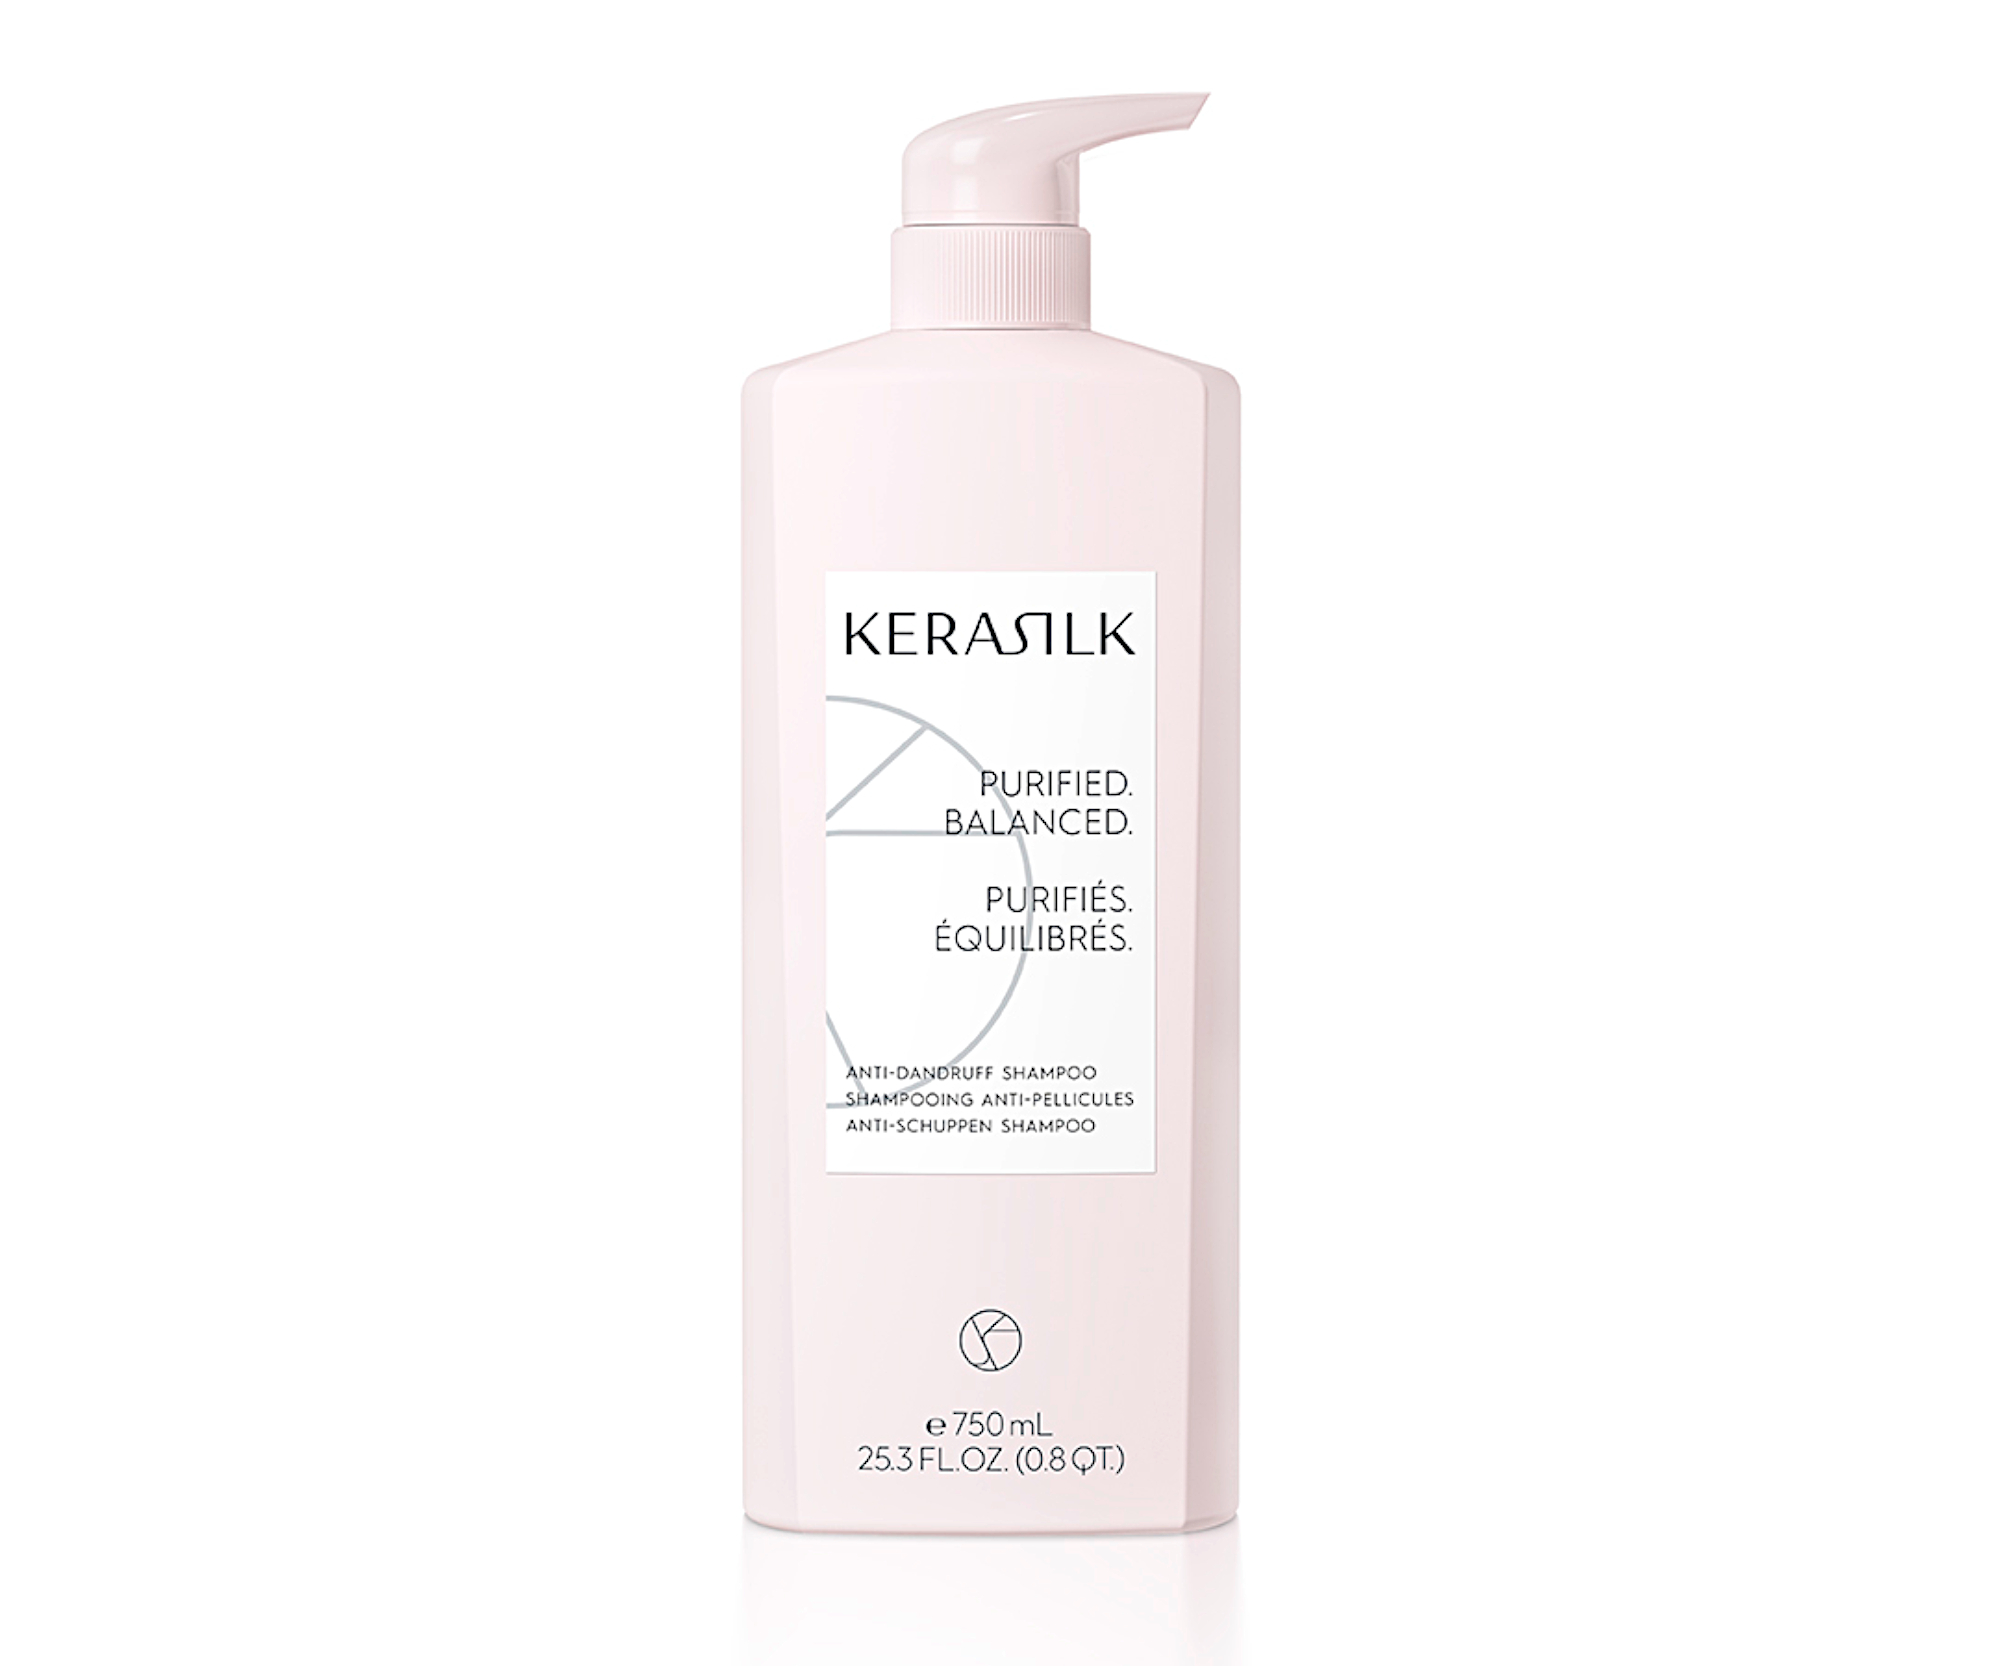 Jemný čisticí šampon proti lupům Kerasilk Anti-Dandruff Shampoo - 750 ml (511610) + DÁREK ZDARMA